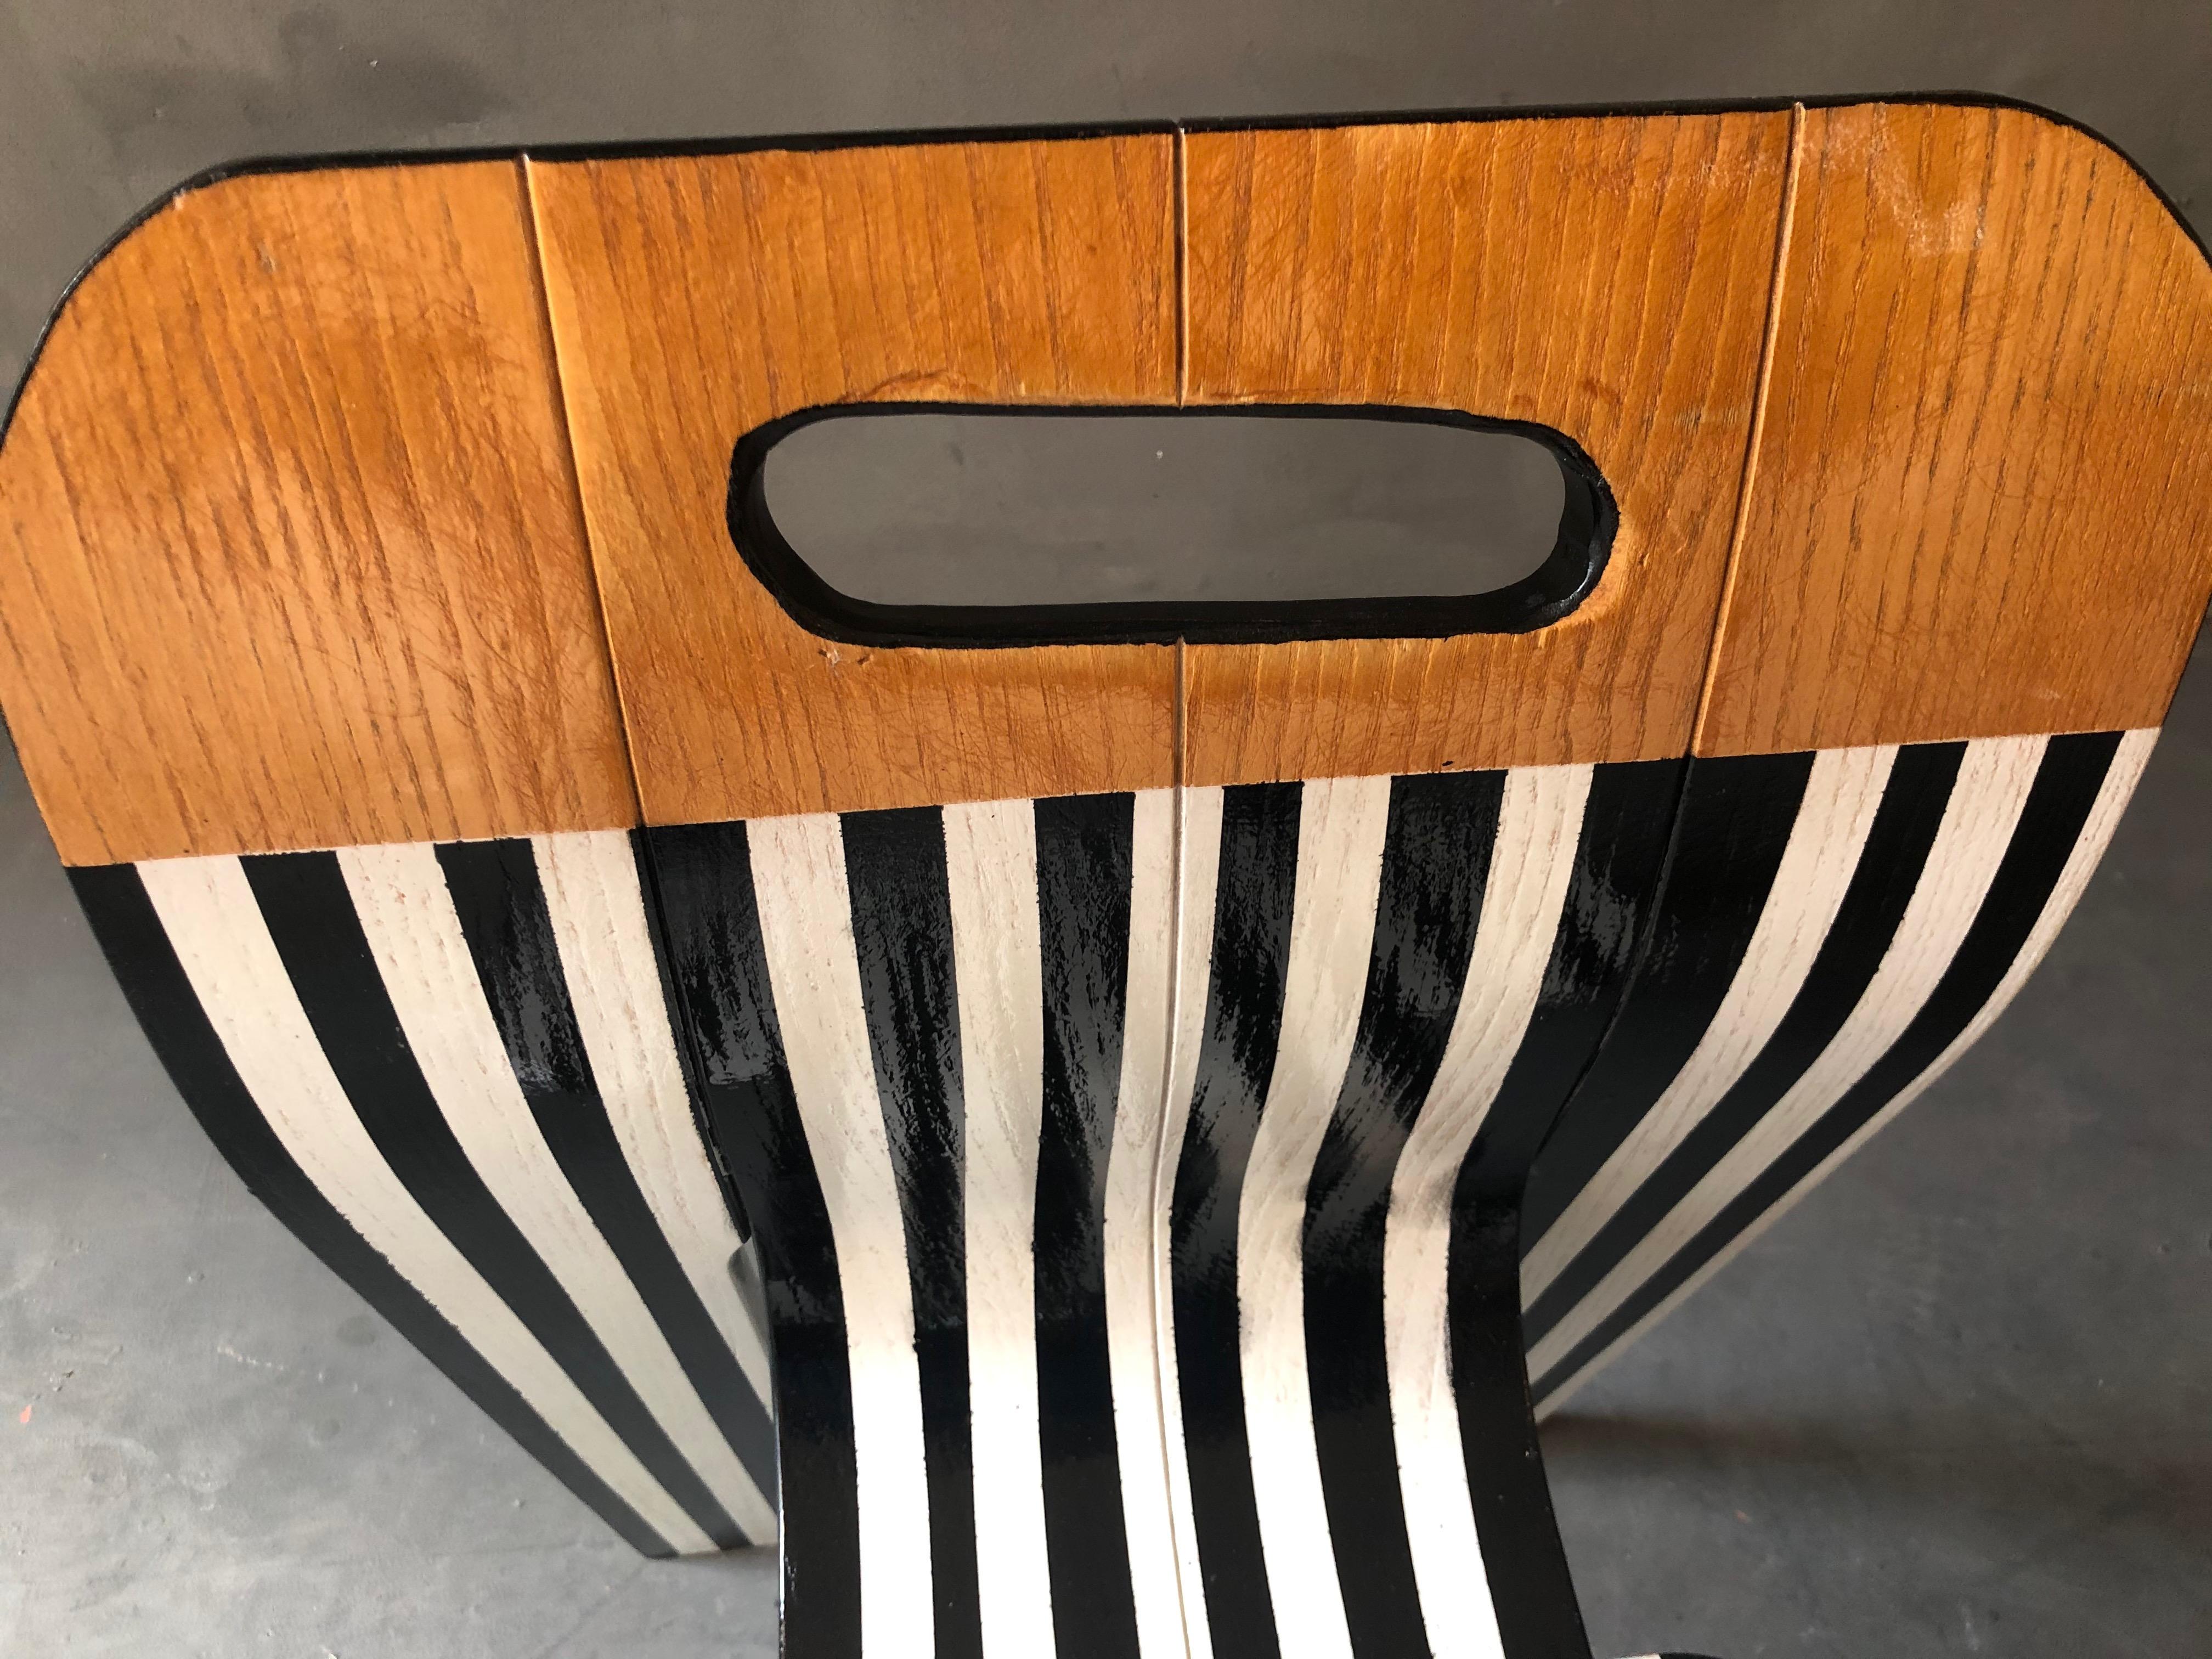 Strip Chair, Gijs Bakker for Castelijn, contemporized in B & W by Atelier Staab For Sale 4